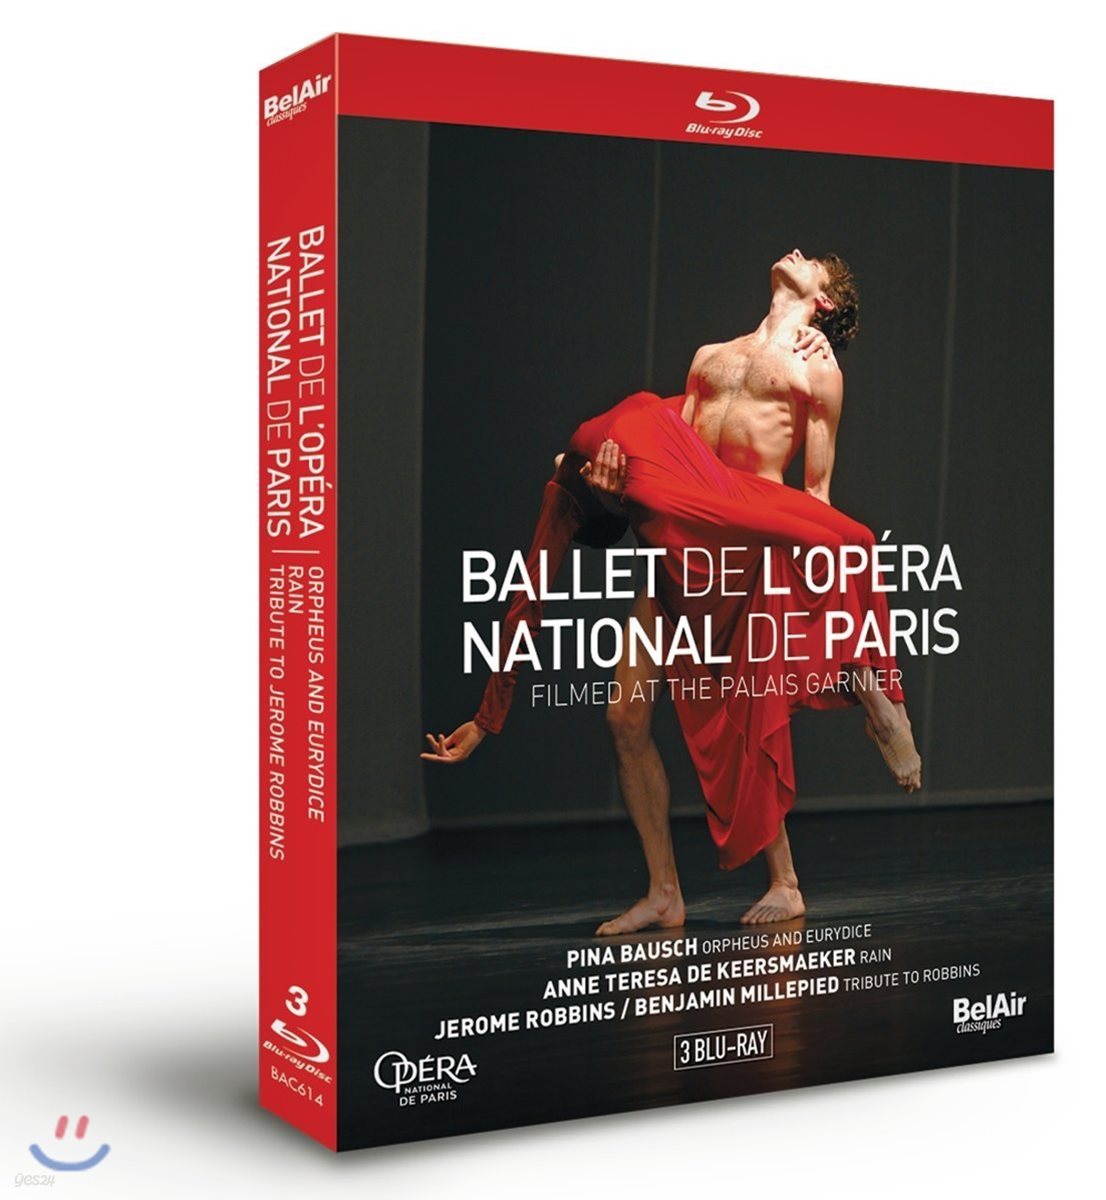 Pina Bausch / Jerome Robbins 파리 오페라 발레단의 가르니에 극장 3부작 (Ballet de l&#39;Opera National de Paris at the Palais Garnier)